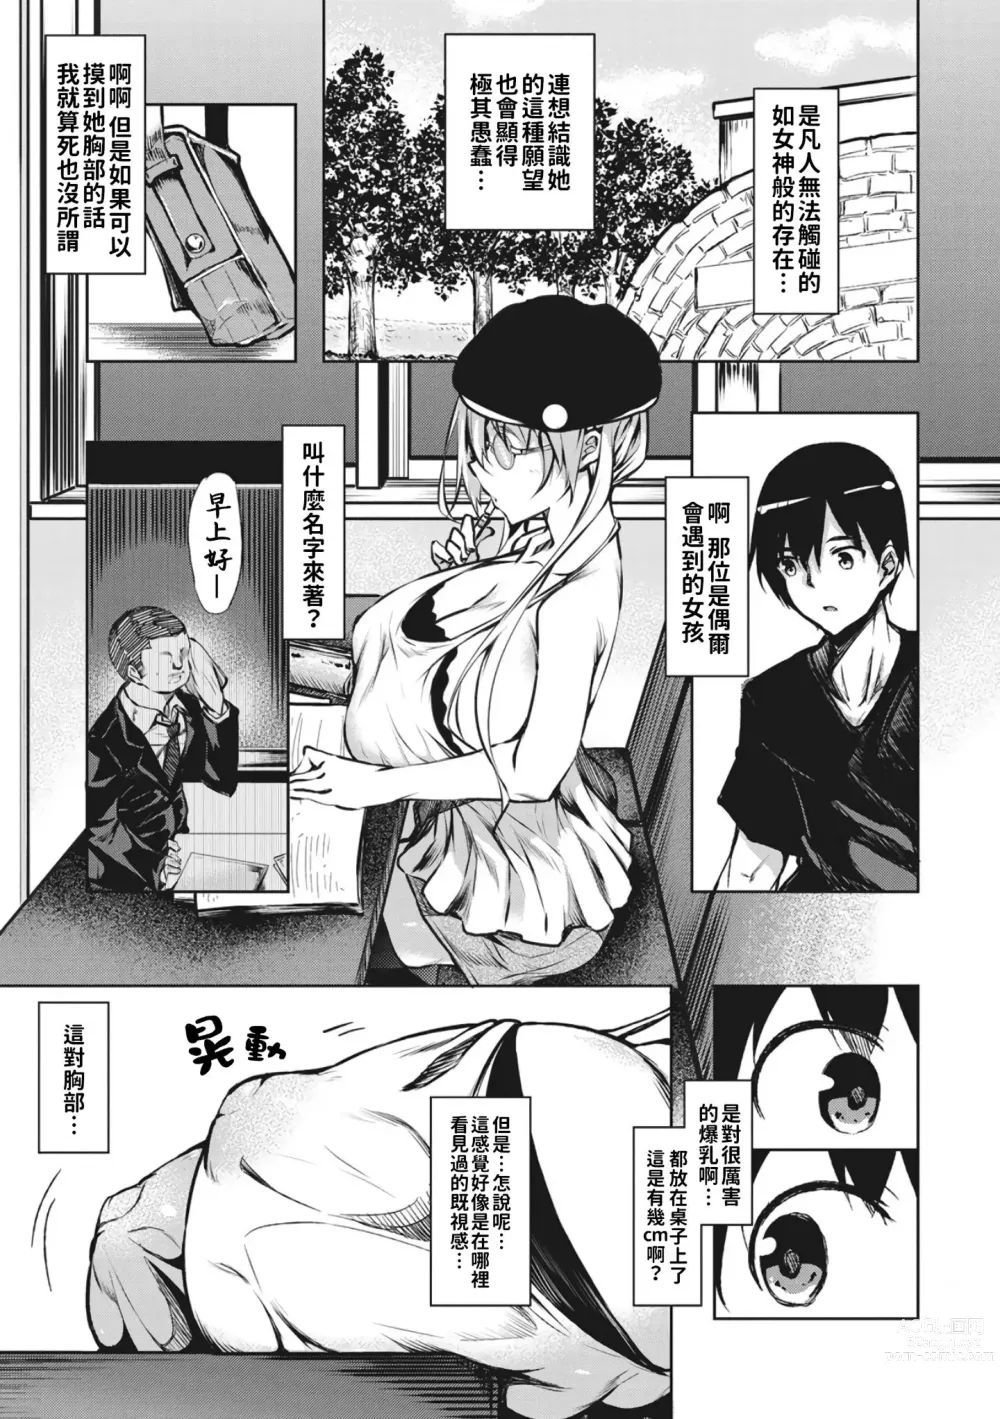 Page 7 of manga ミルクまみれ